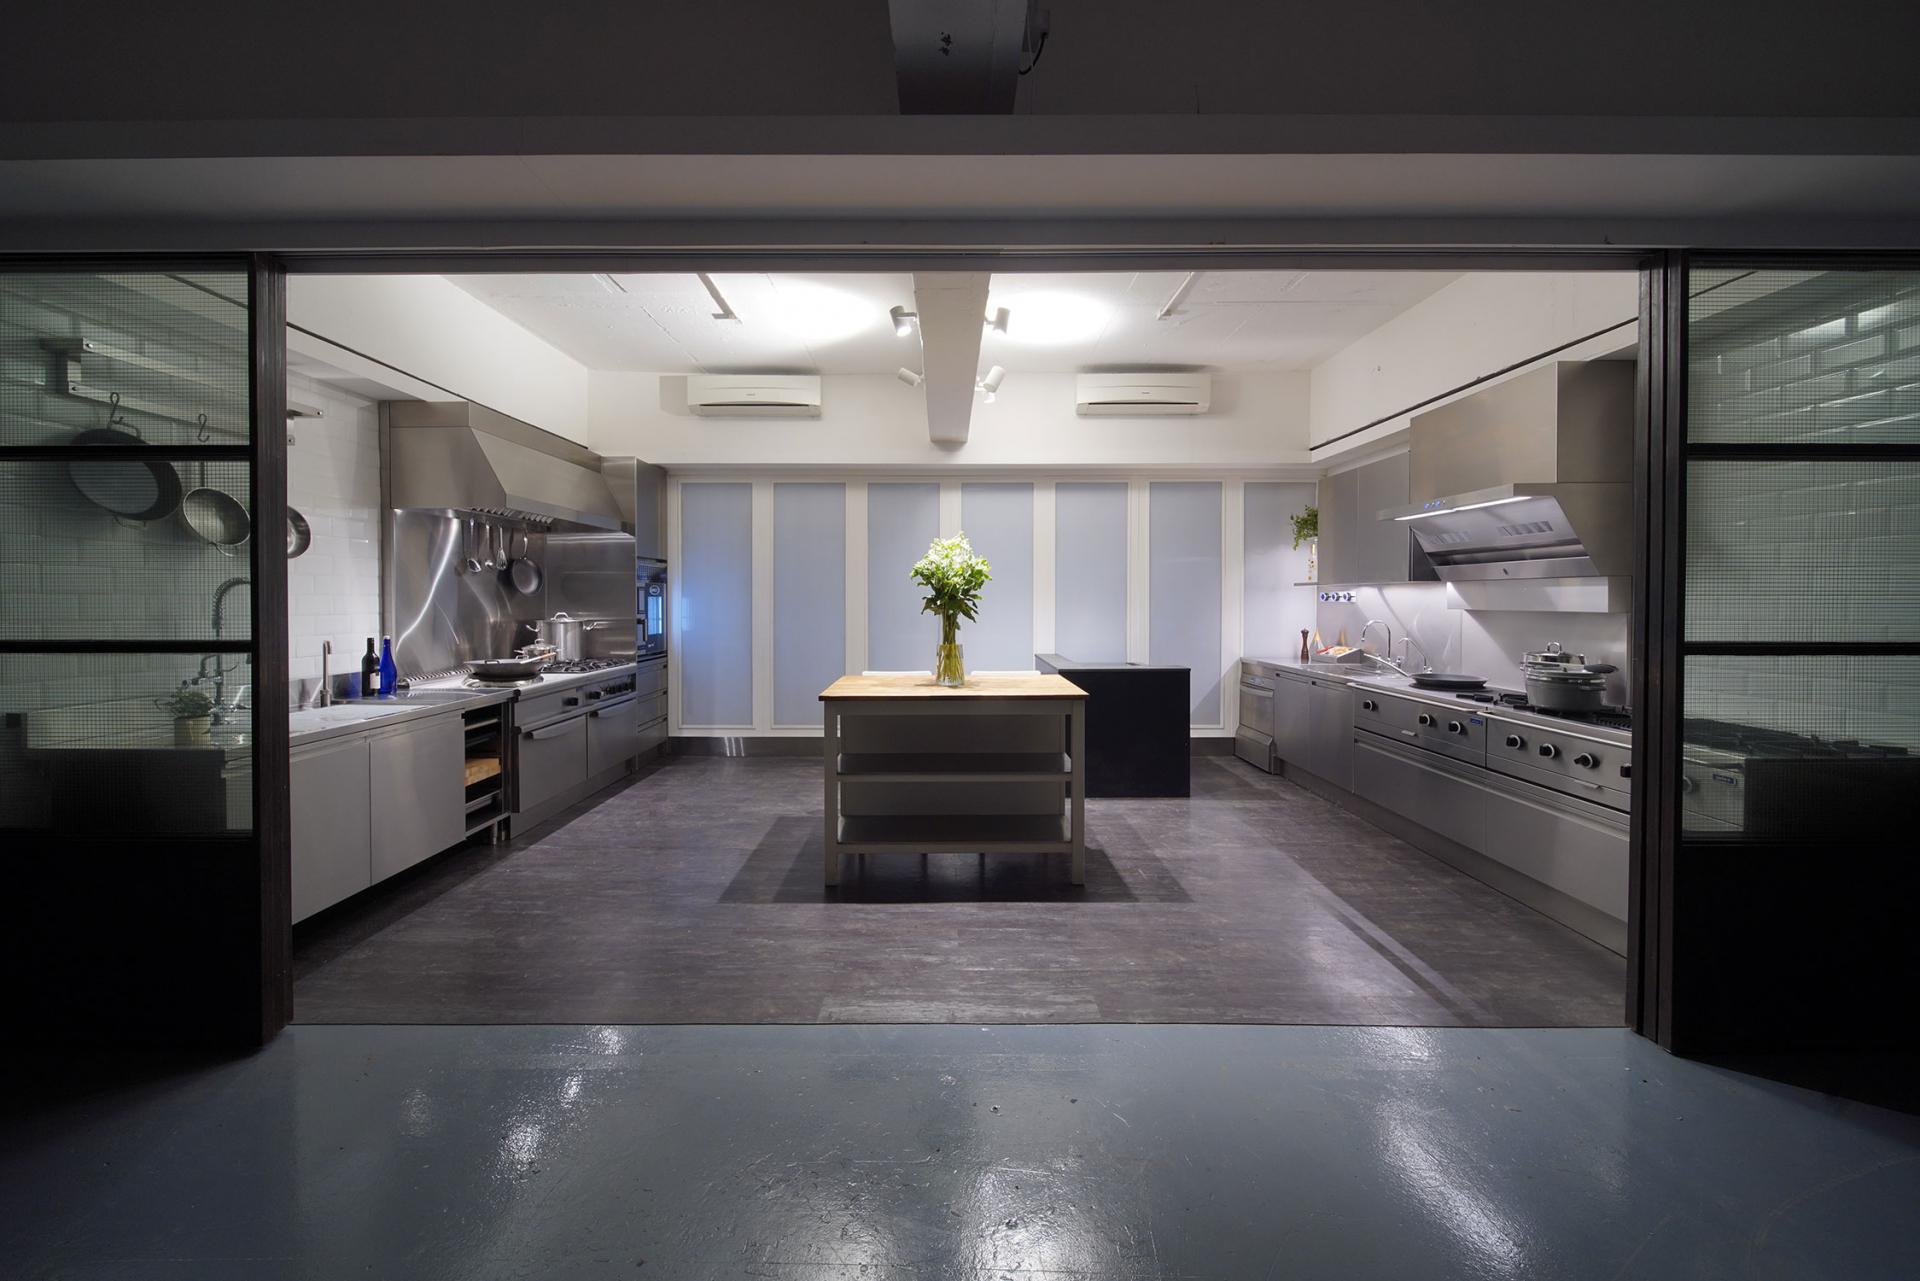 Professional Home Kitchen Design : 20 Professional Home Kitchen Designs